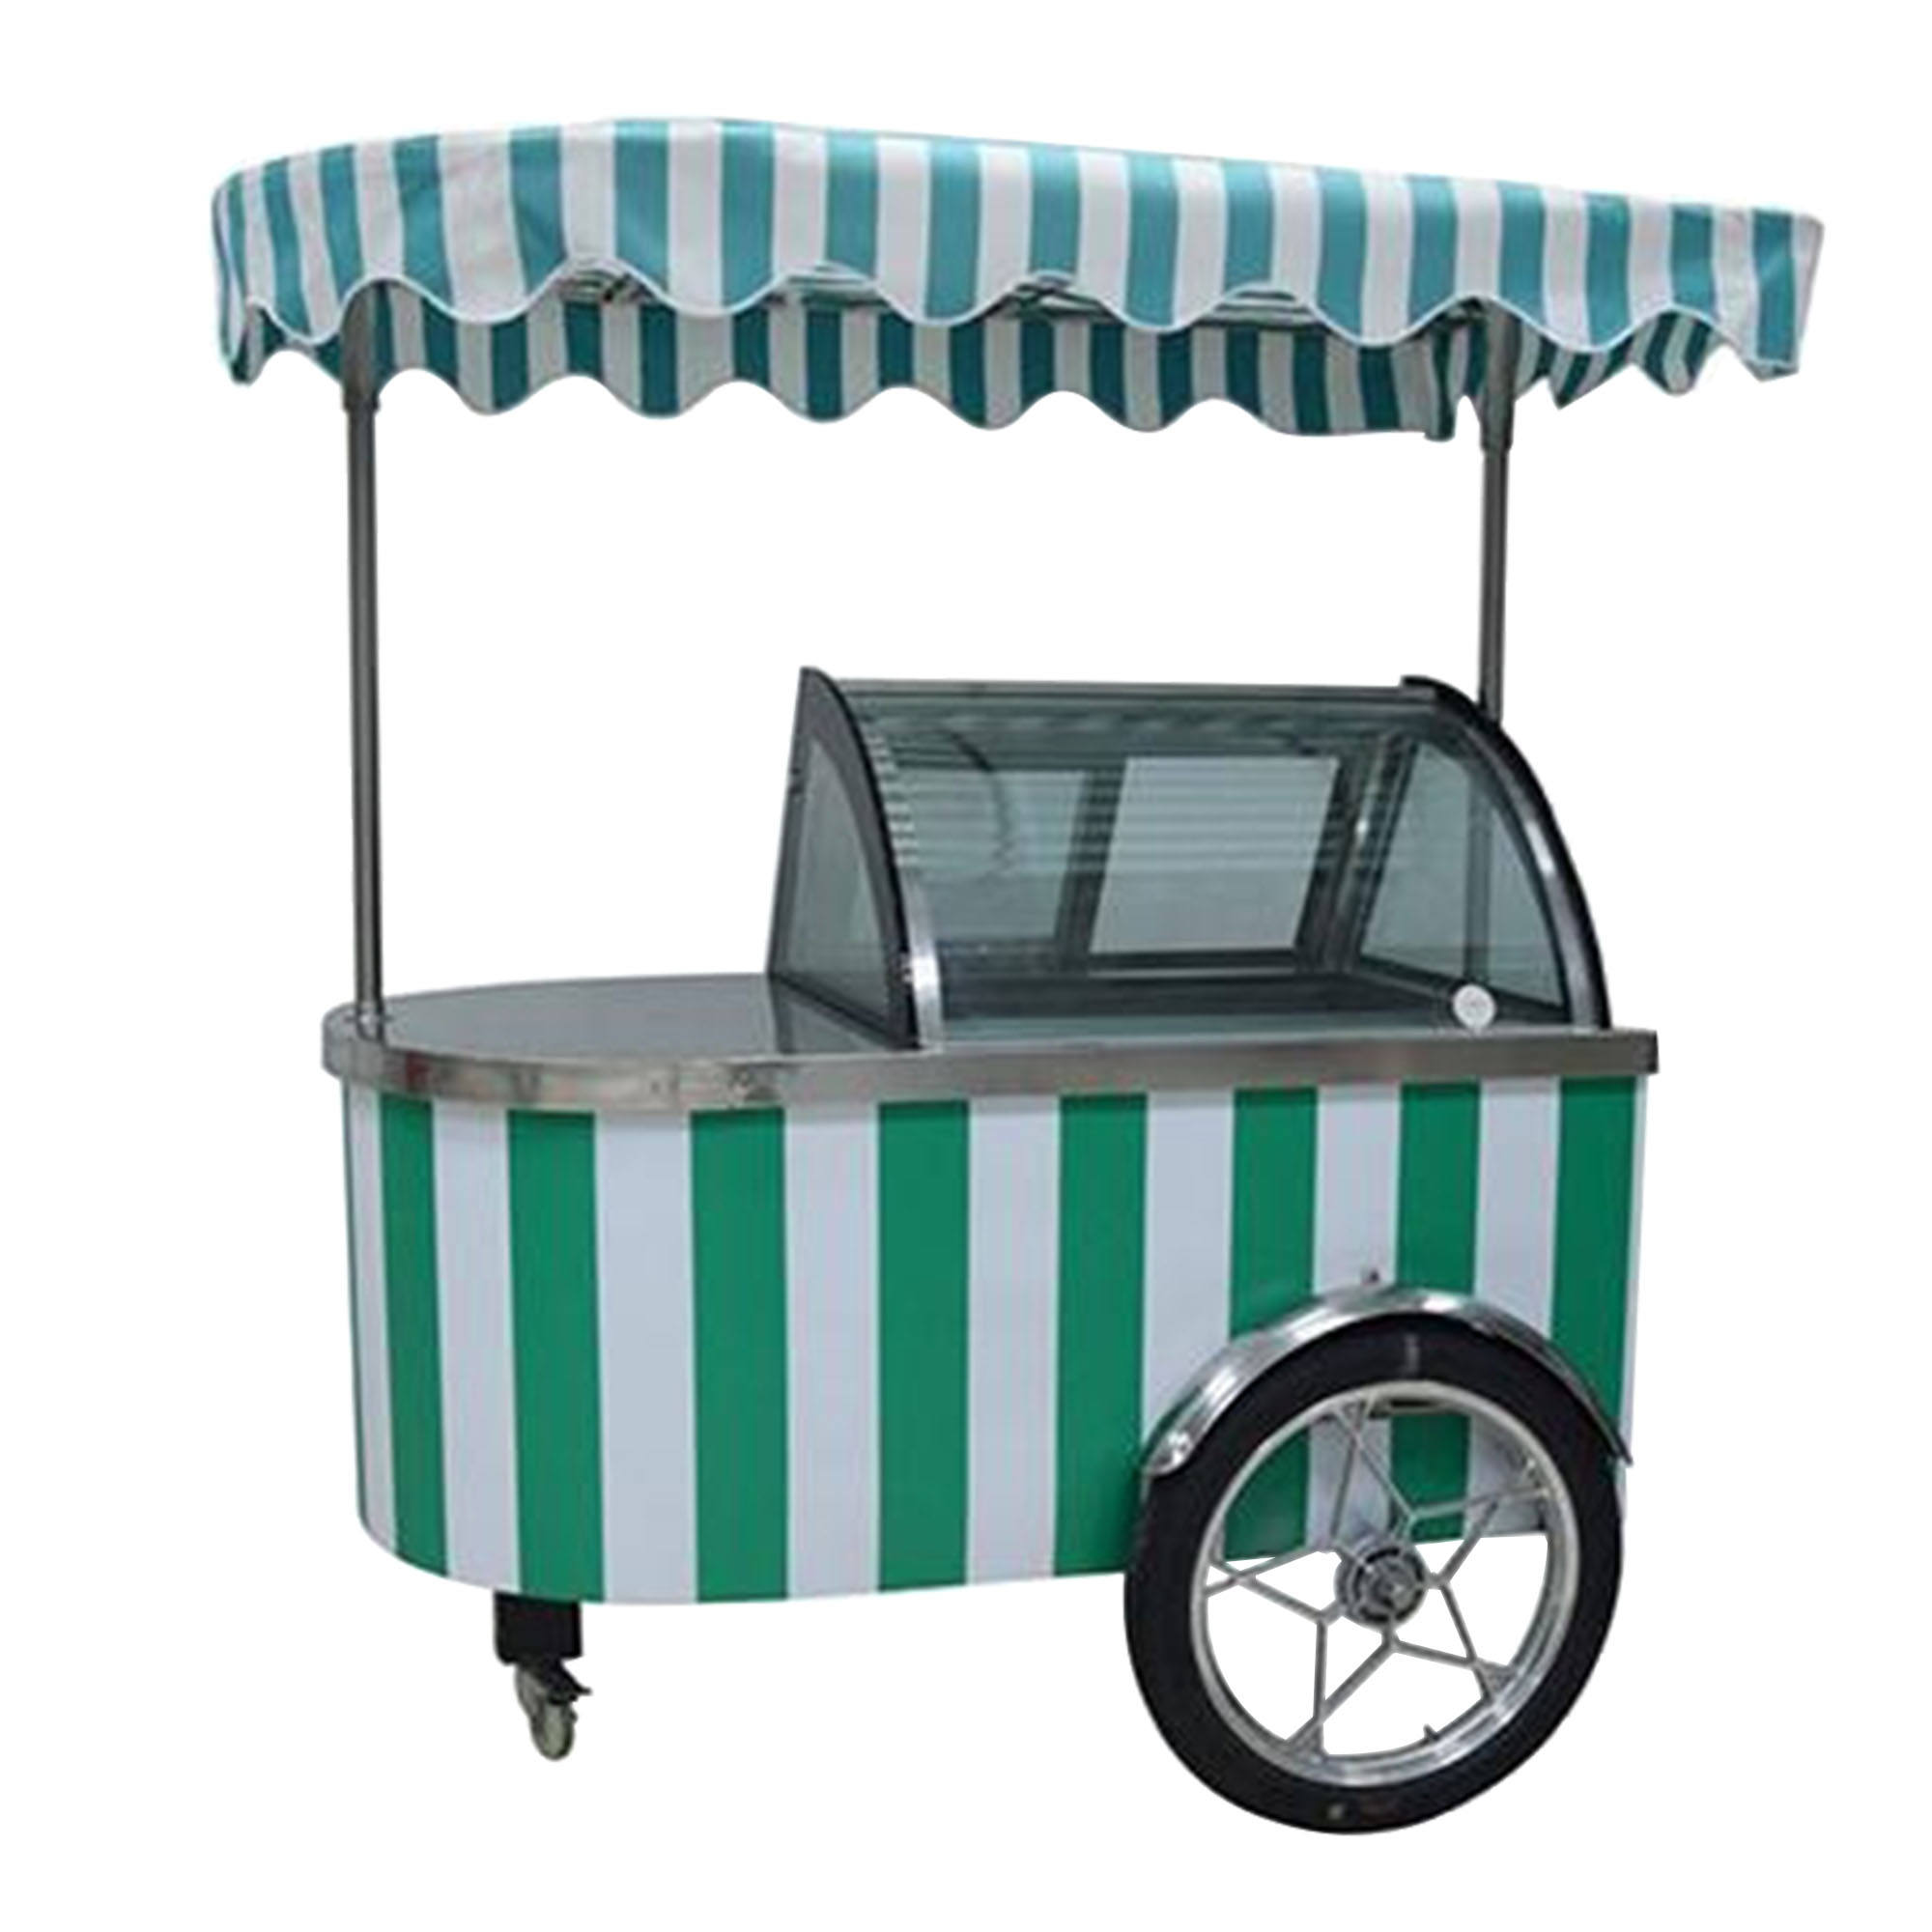 Fashion Italian Gelato Ice Cream Mobile Push Popsicle Showcase Freezers Vending Cart for outdoor - ice cream cart - 7